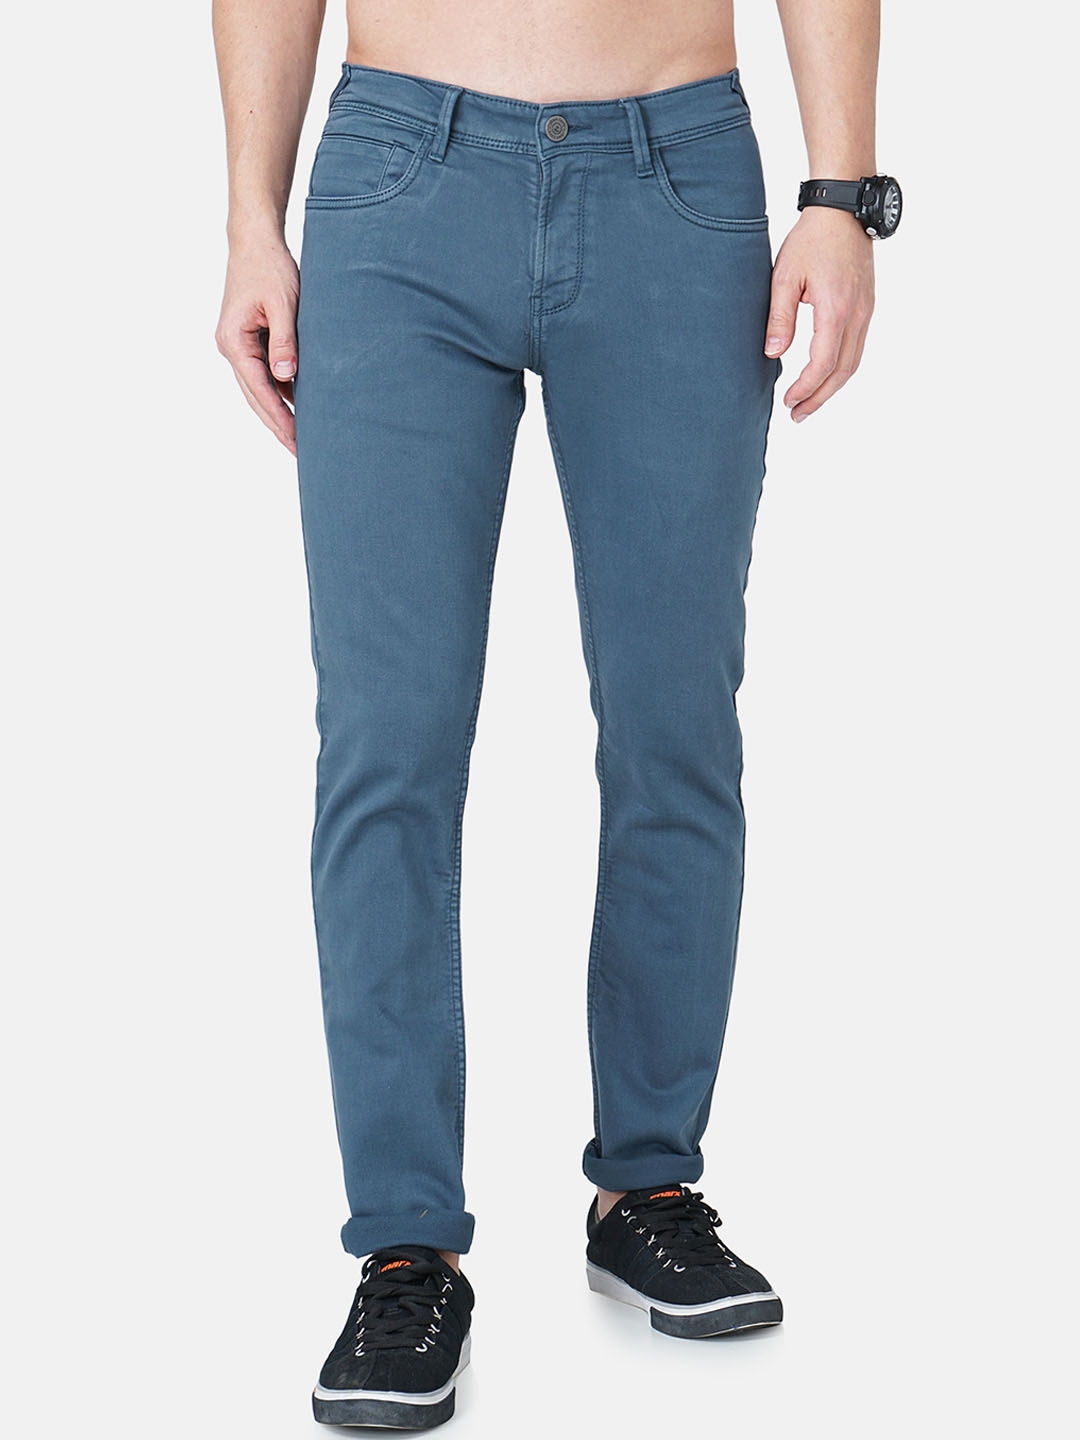 Buy Jean Cafe Men Grey Jean Slim Fit Jeans 98% Cotton - Jeans for Men ...